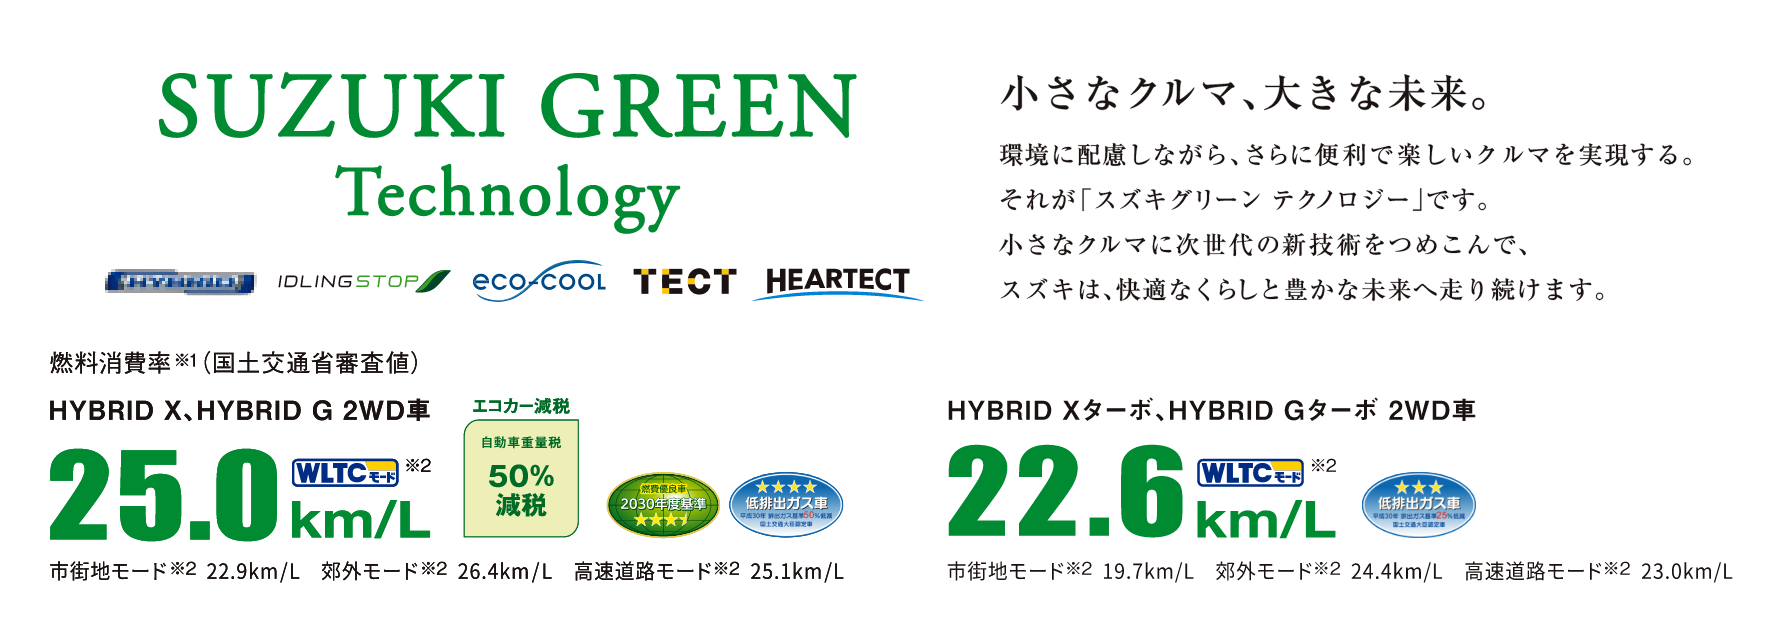 SUZUKI GREEN Technology 小さなクルマ、大きな未来。 環境に配慮しながら、さらに便利で楽しいクルマを実現する。それが「スズキグリーン テクノロジー」です。小さなクルマに次世代の新技術をつめこんで、スズキは、快適なくらしと豊かな未来へ走り続けます。 燃料消費率※1(国土交通省審査値 HYBRID X、HYBRID G 2WD車 25.0km/L 市街地モード※2 22.9km/L 郊外モード※2 26.4km/L 高速道路モード※2 25.1km/L HYBRID Xターボ、HYBRID Gターボ 2WD車 22.6km/L 市街地モード※2 19.7km/L 郊外モード※2 24.4km/L 高速道路モード※2 23.0km/L)